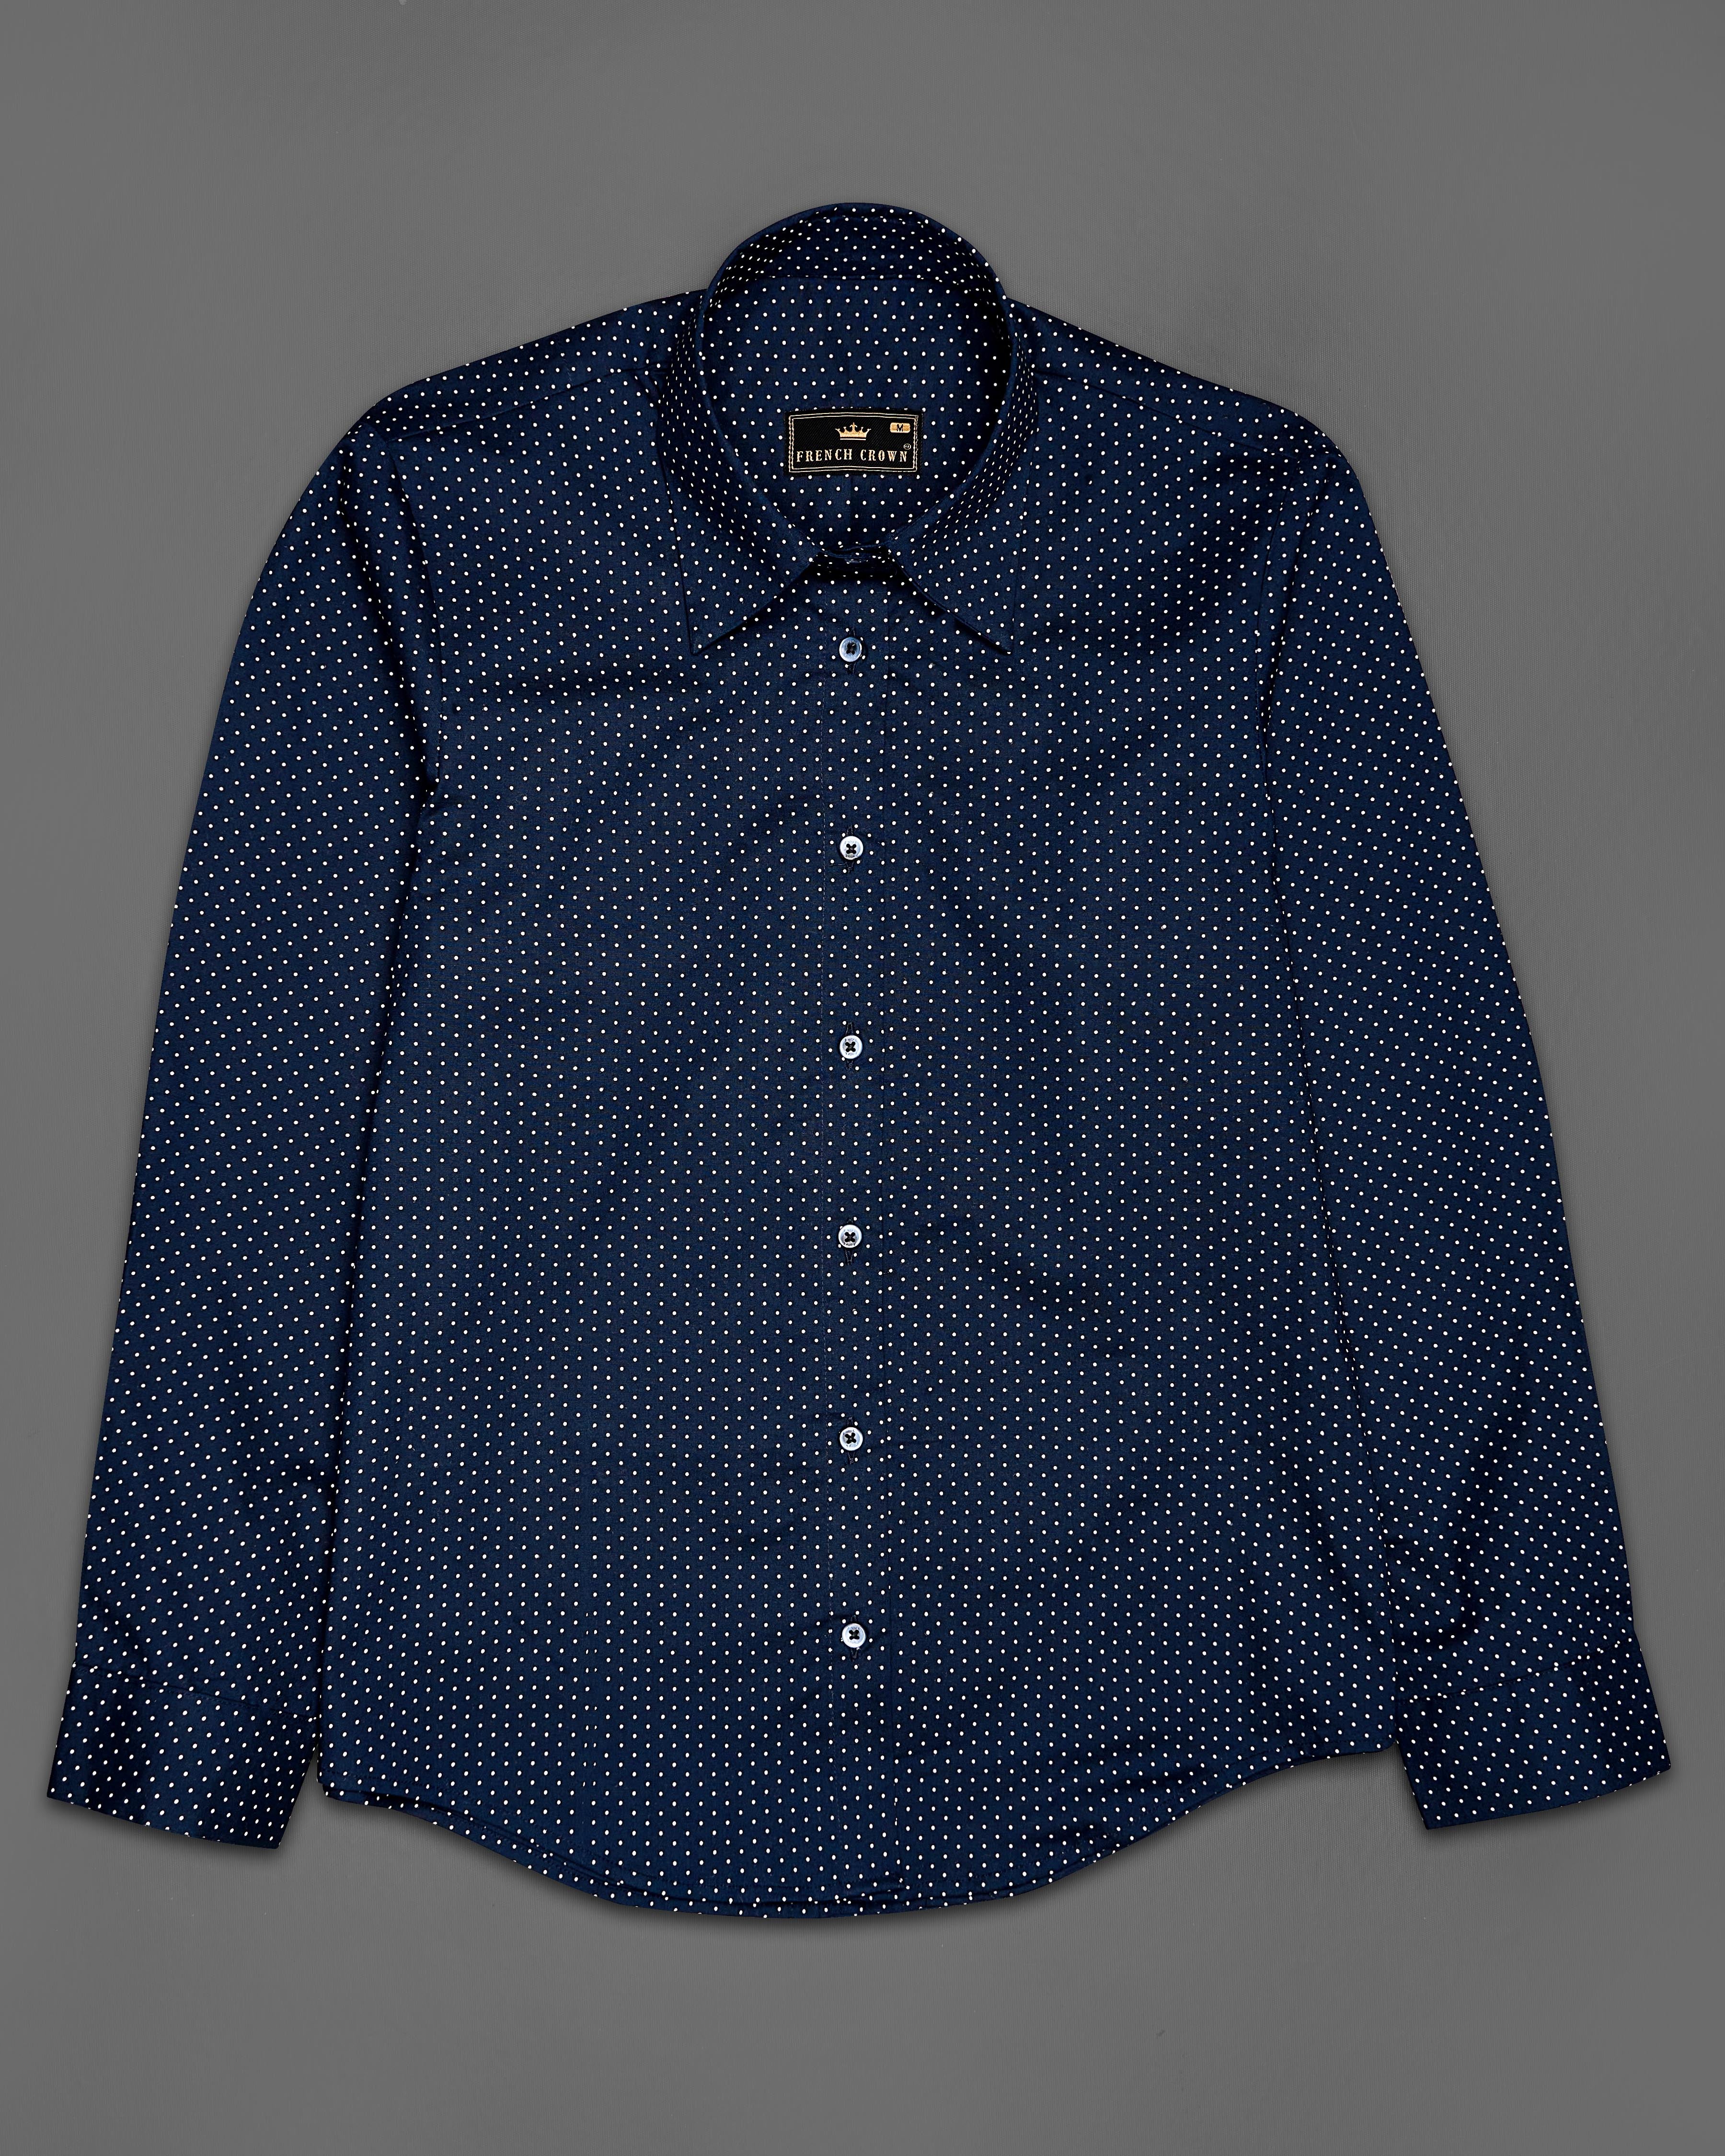 Ebony Clay Blue Polka Dotted Premium Cotton Shirt WS045-BLE-32, WS045-BLE-34, WS045-BLE-36, WS045-BLE-38, WS045-BLE-40, WS045-BLE-42